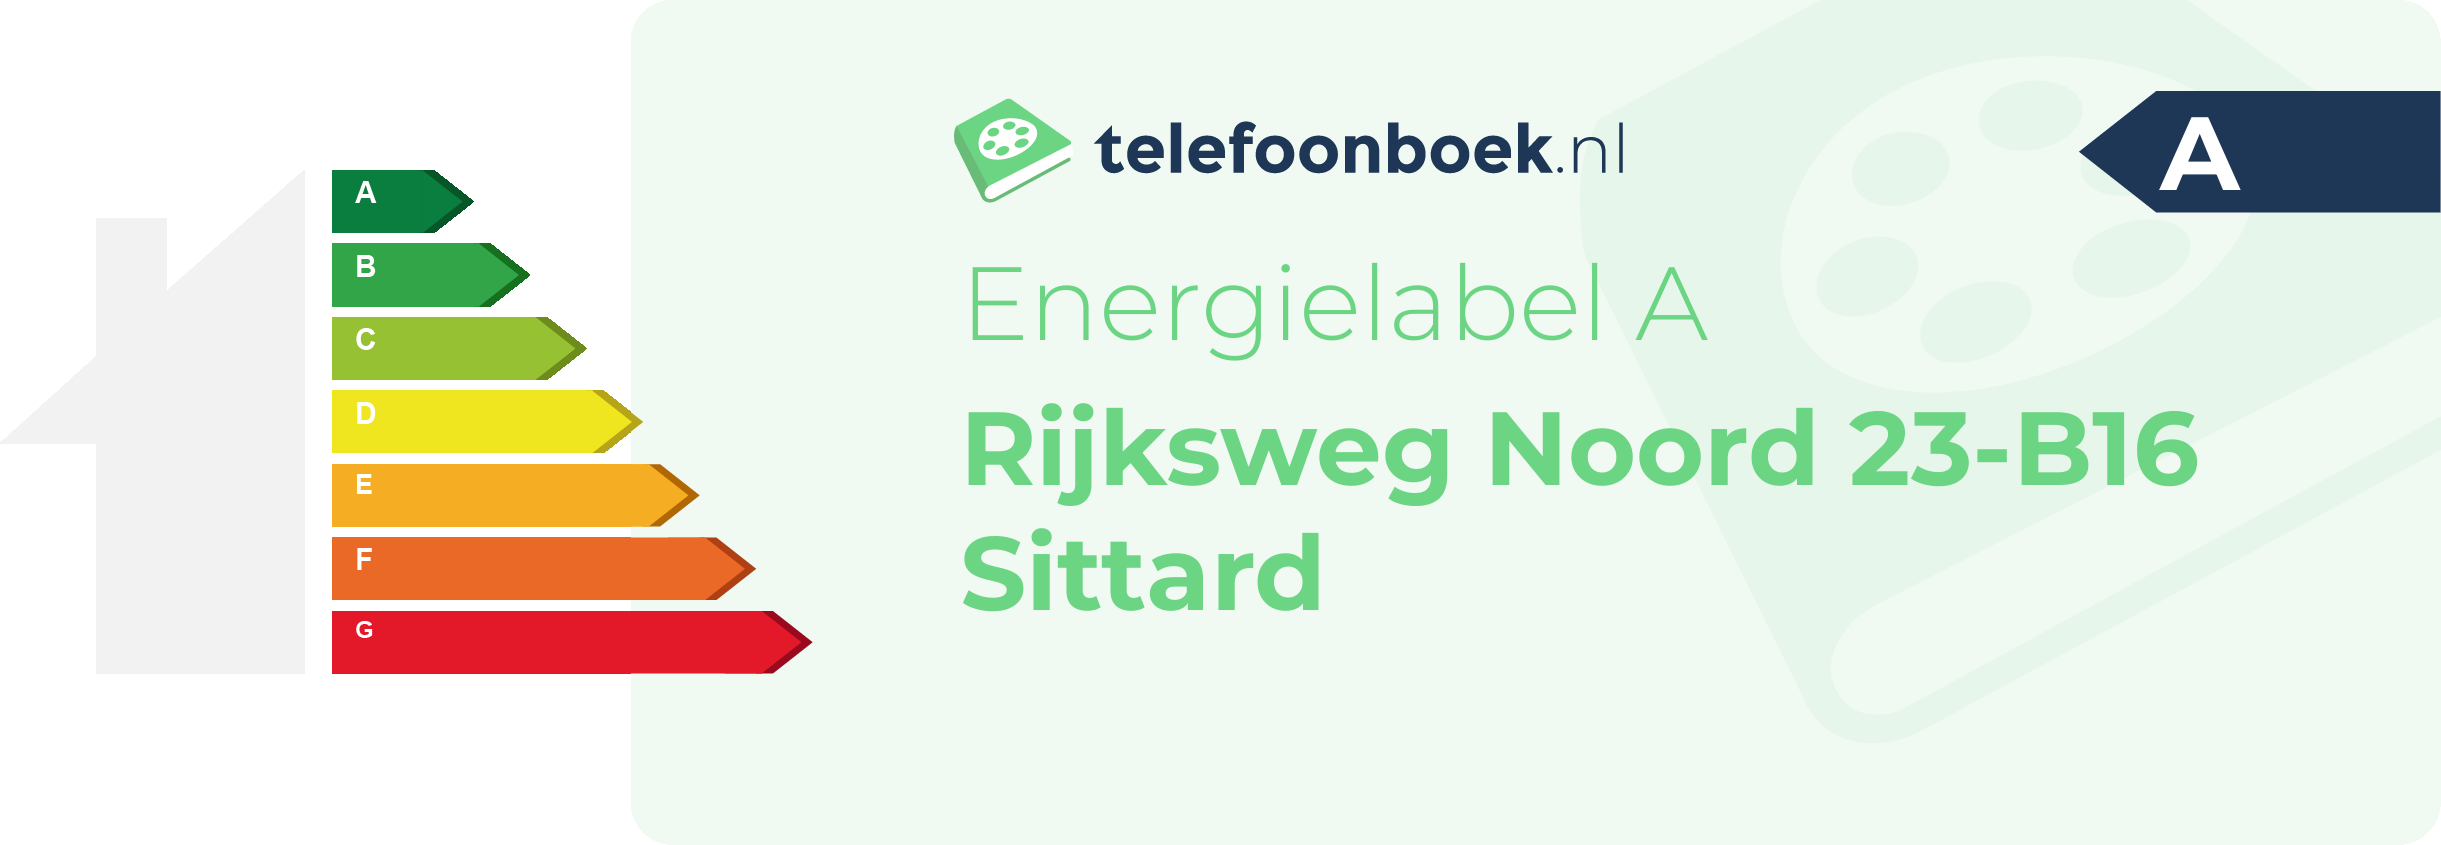 Energielabel Rijksweg Noord 23-B16 Sittard